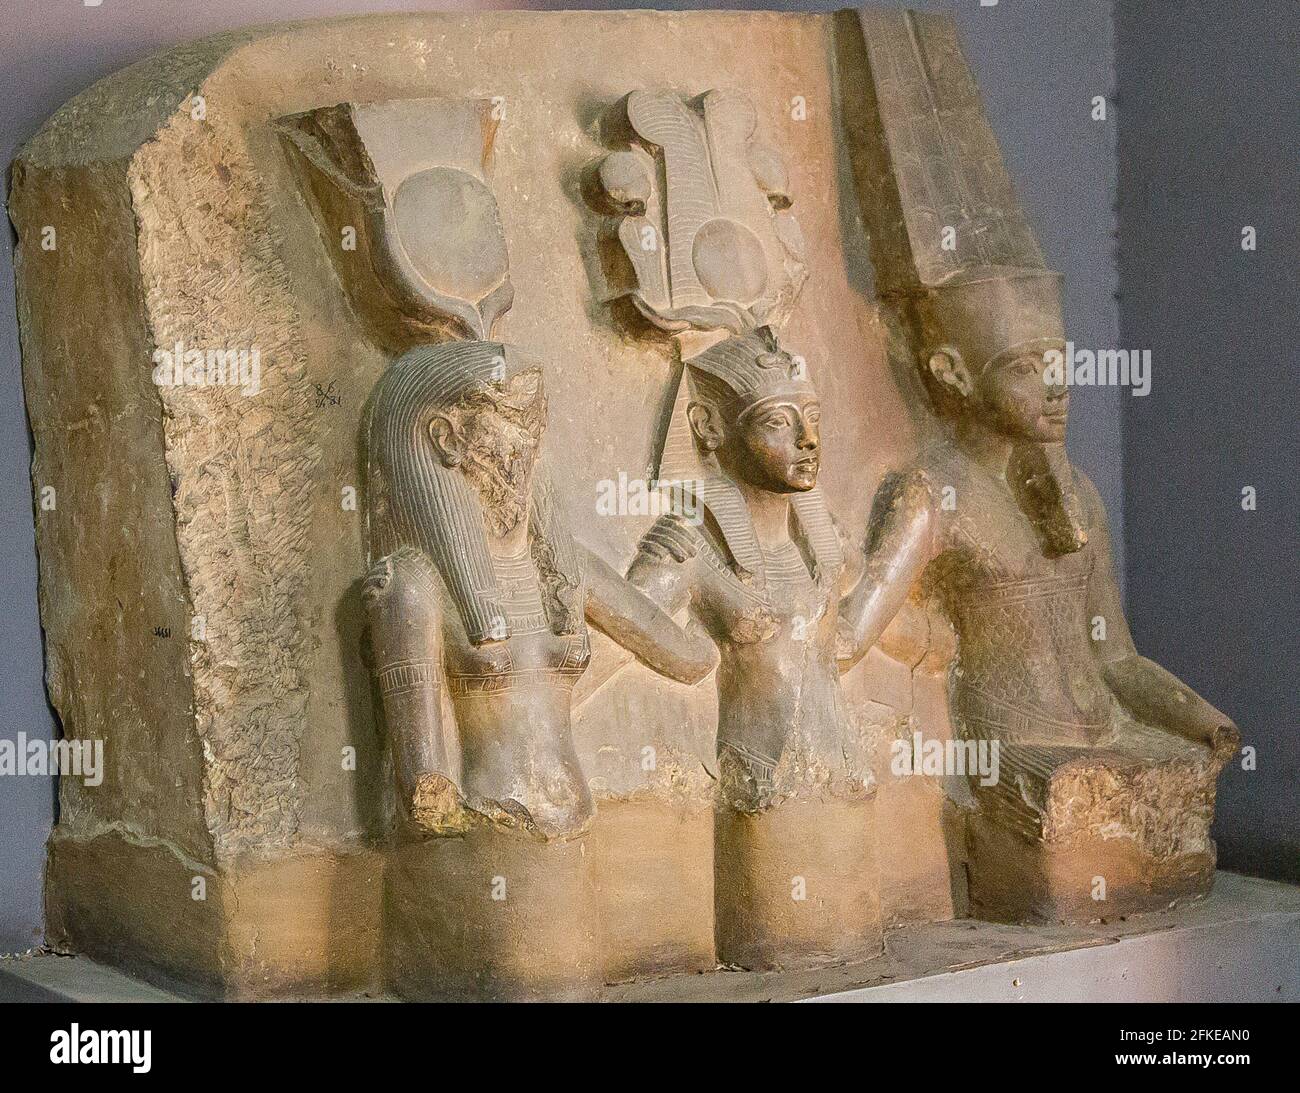 Egypt, Cairo, Egyptian Museum, limestone statue group of the king Tutankhamun between god Amon and goddess Mut.  From the Karnak cachette. Stock Photo